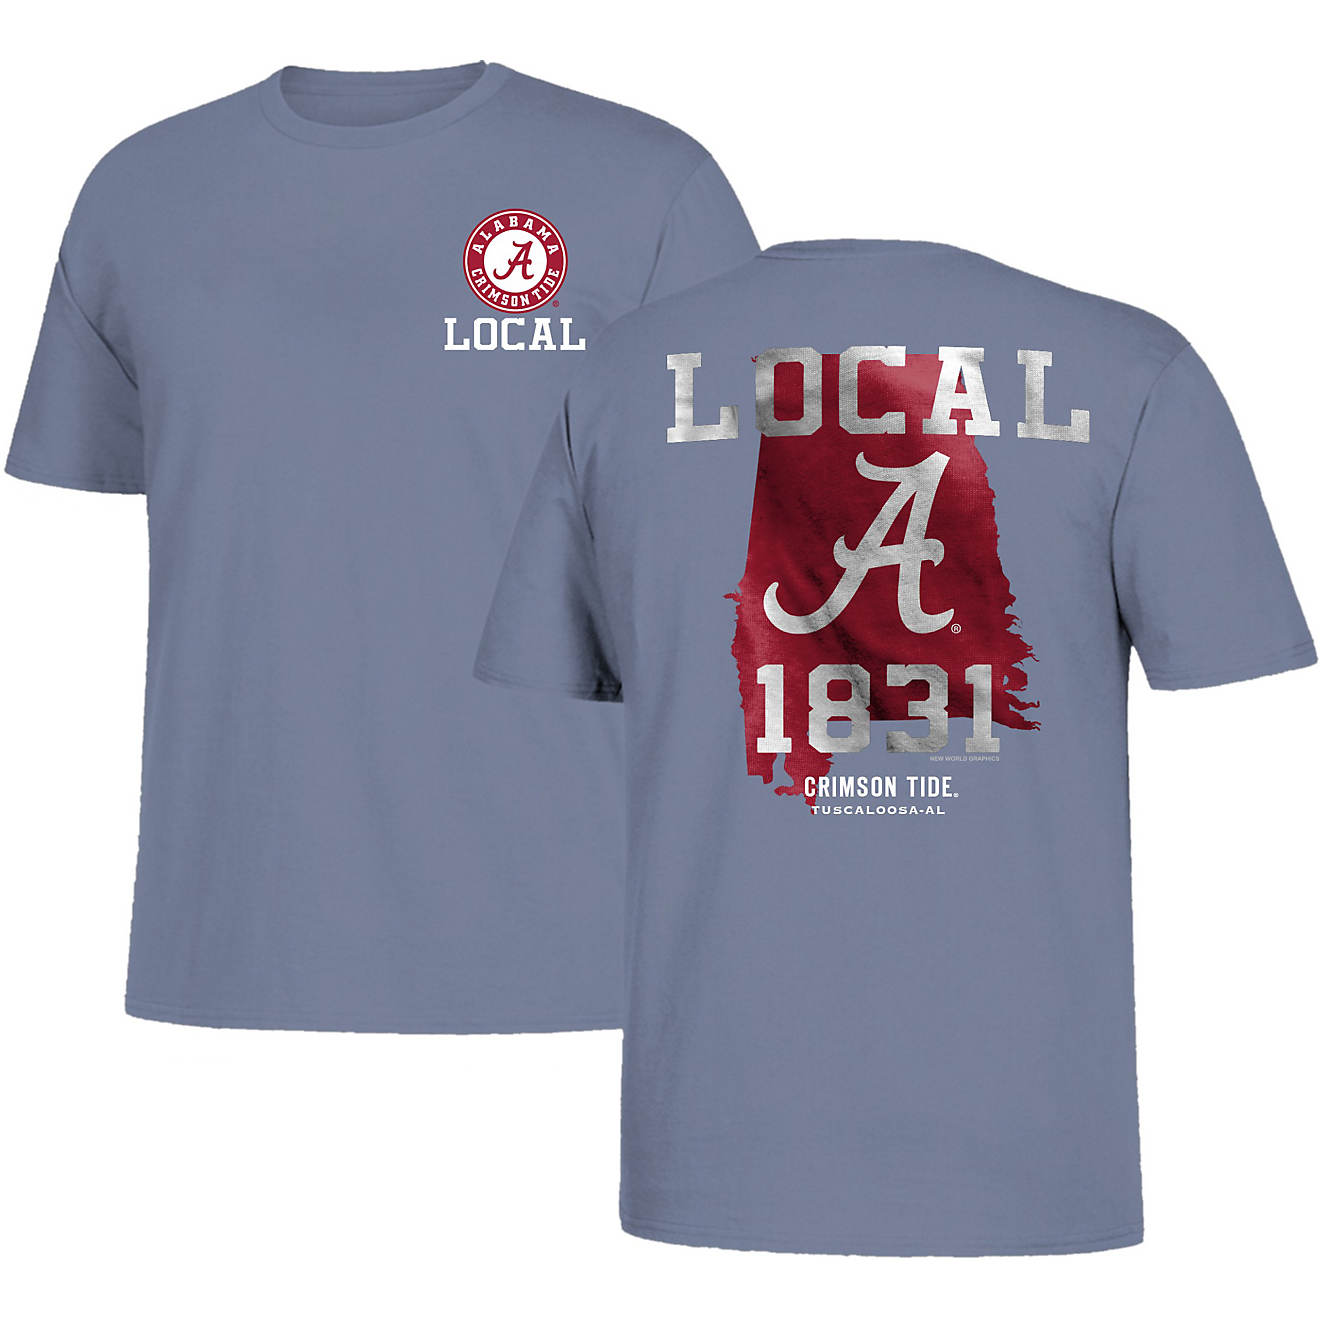 New World Graphics Men's University of Alabama Local T-shirt | Academy